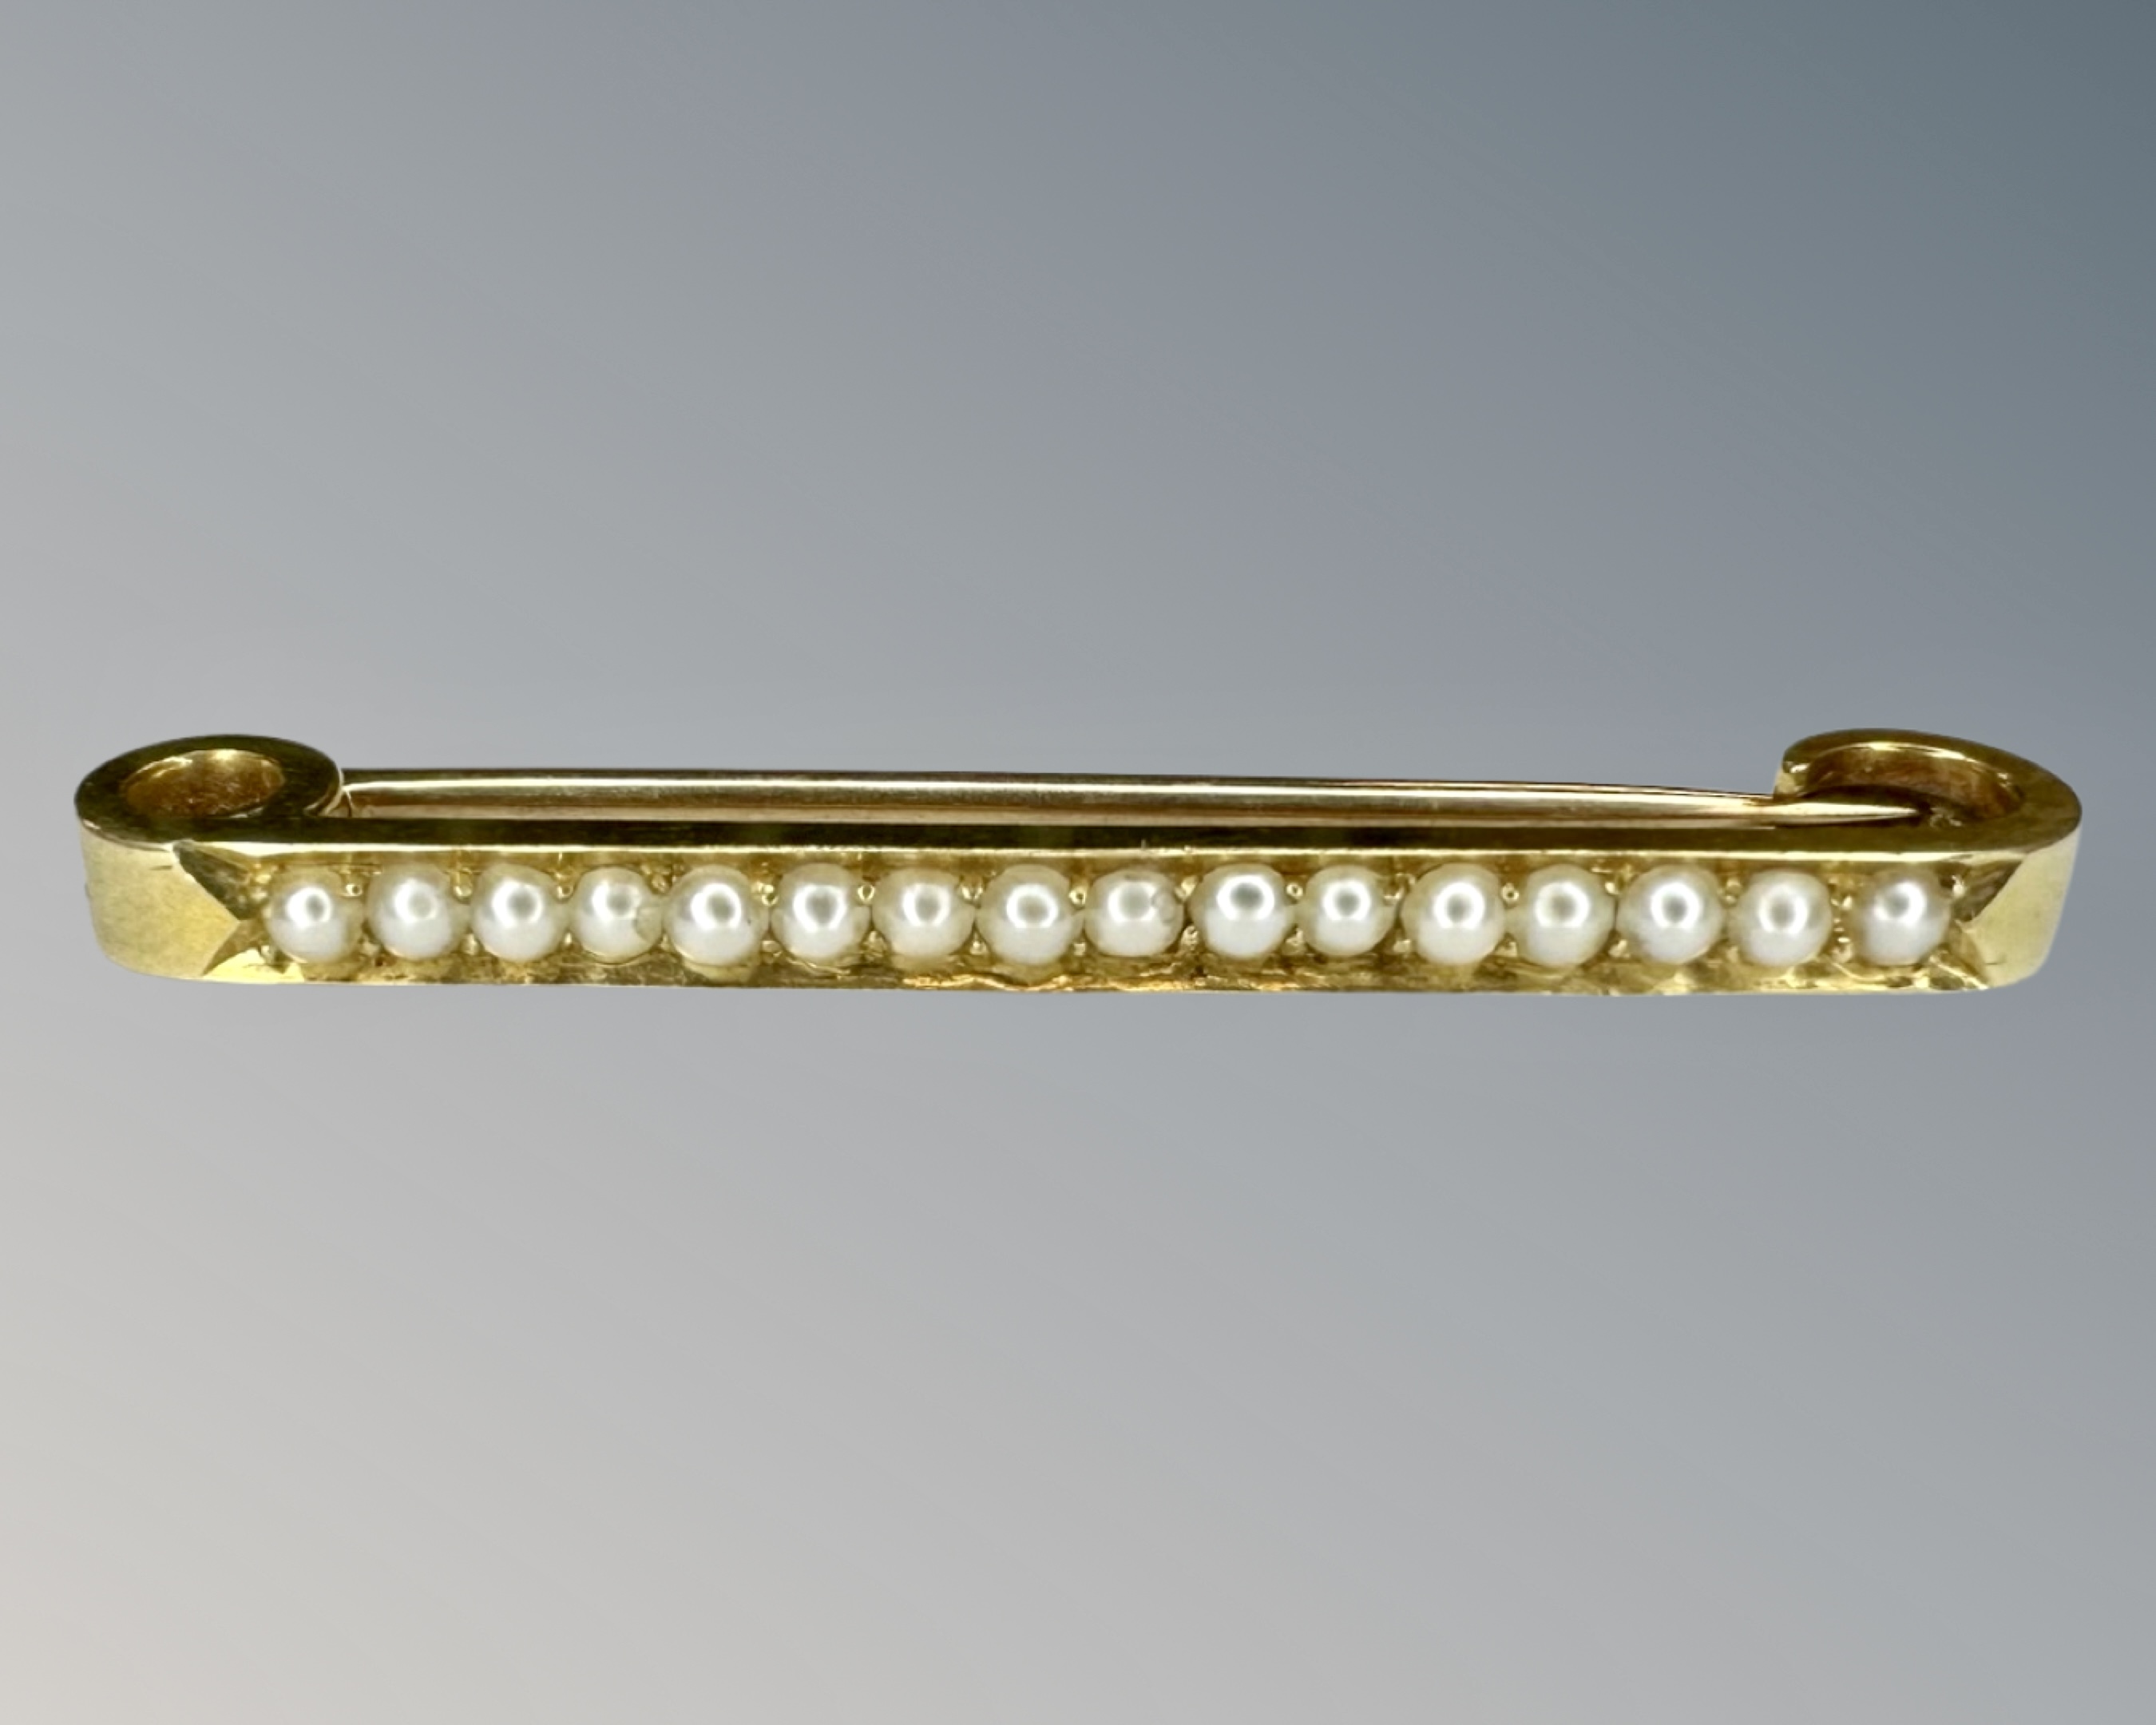 A 15ct gold pearl set bar brooch, width 4.5 cm.